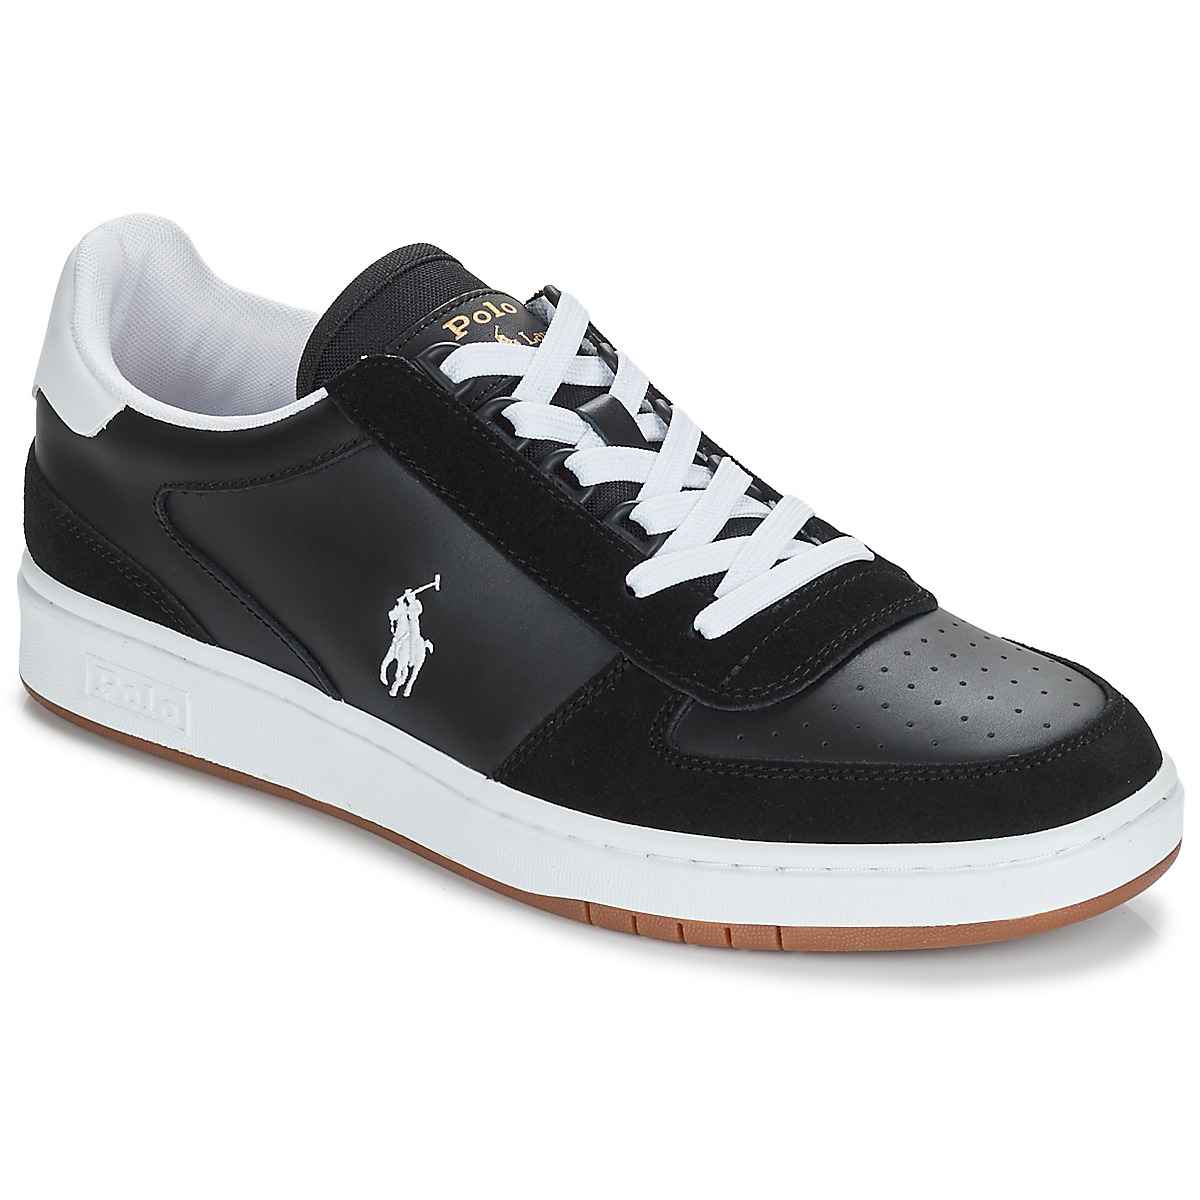 Polo Ralph Lauren Polo Crt Pp-sneakers-athletic Shoe Black